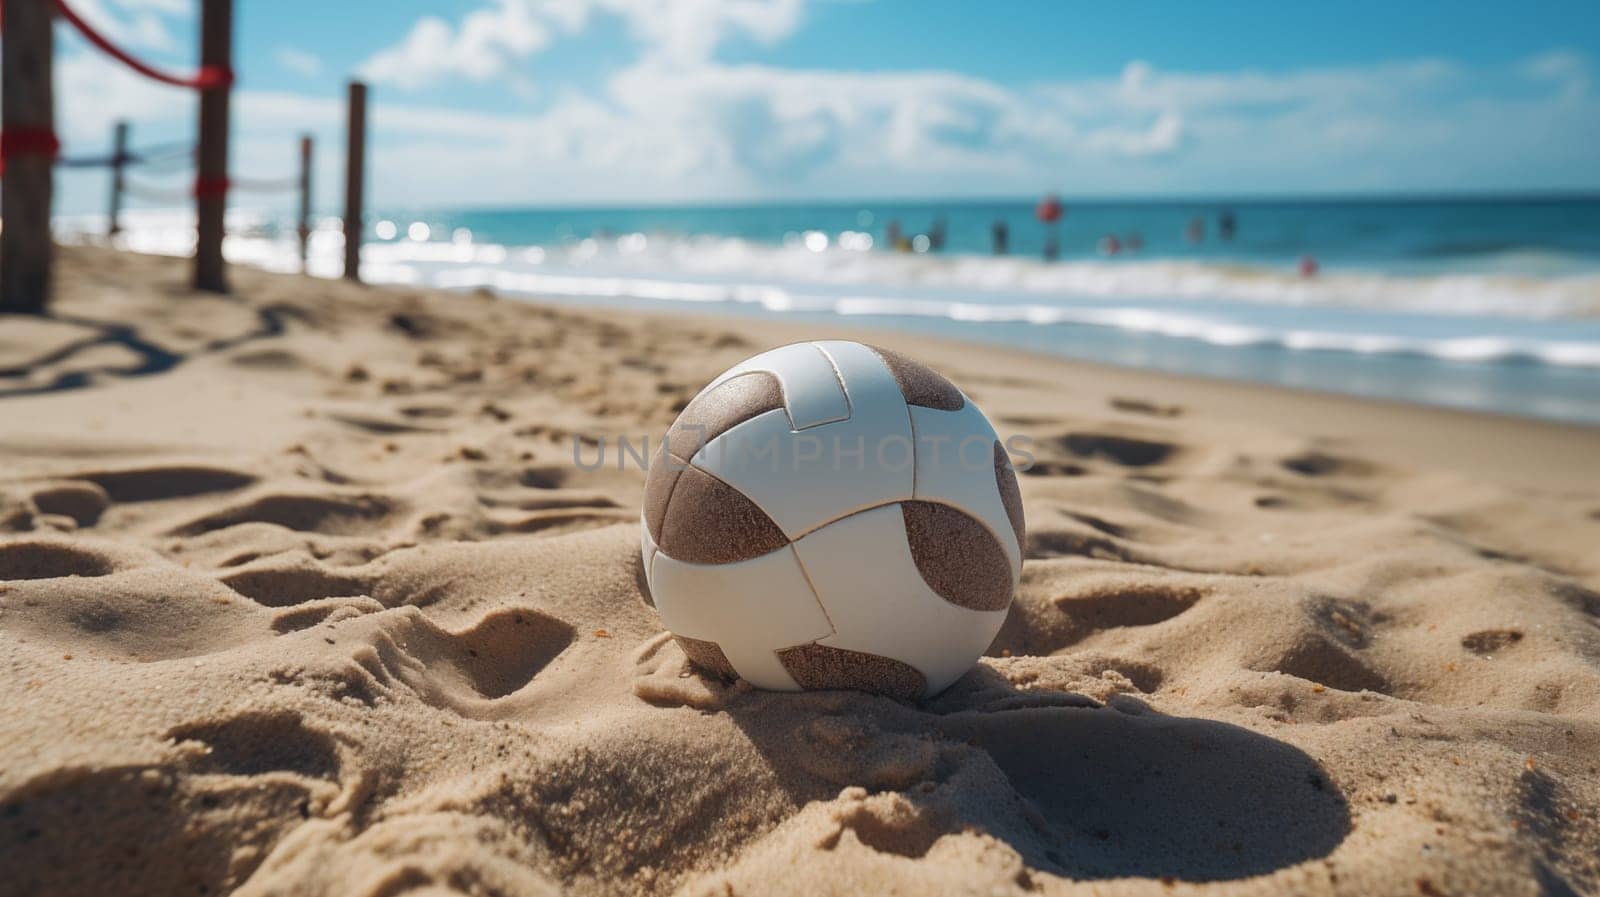 A volleyball lies on a sandy beach by Zakharova